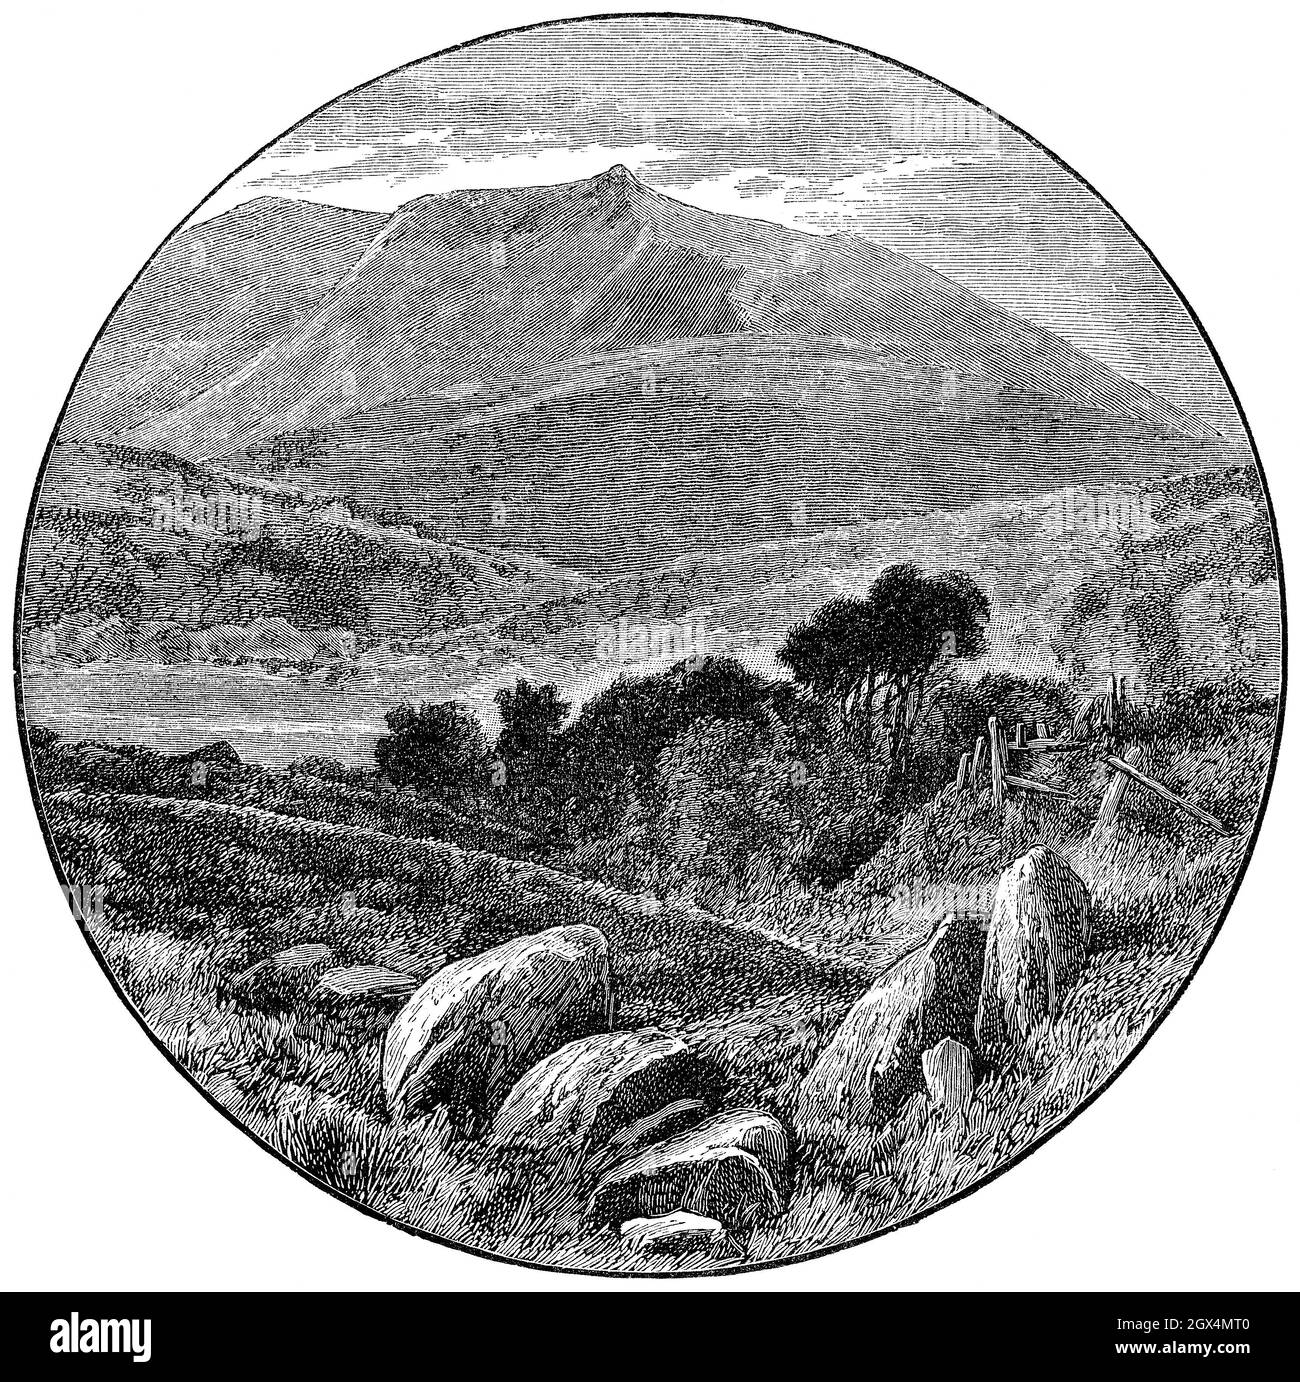 1987 vintage engraving of Lochnagar mountain in the Grampian Mountains in Aberdeenshire, Scotland. Stock Photo